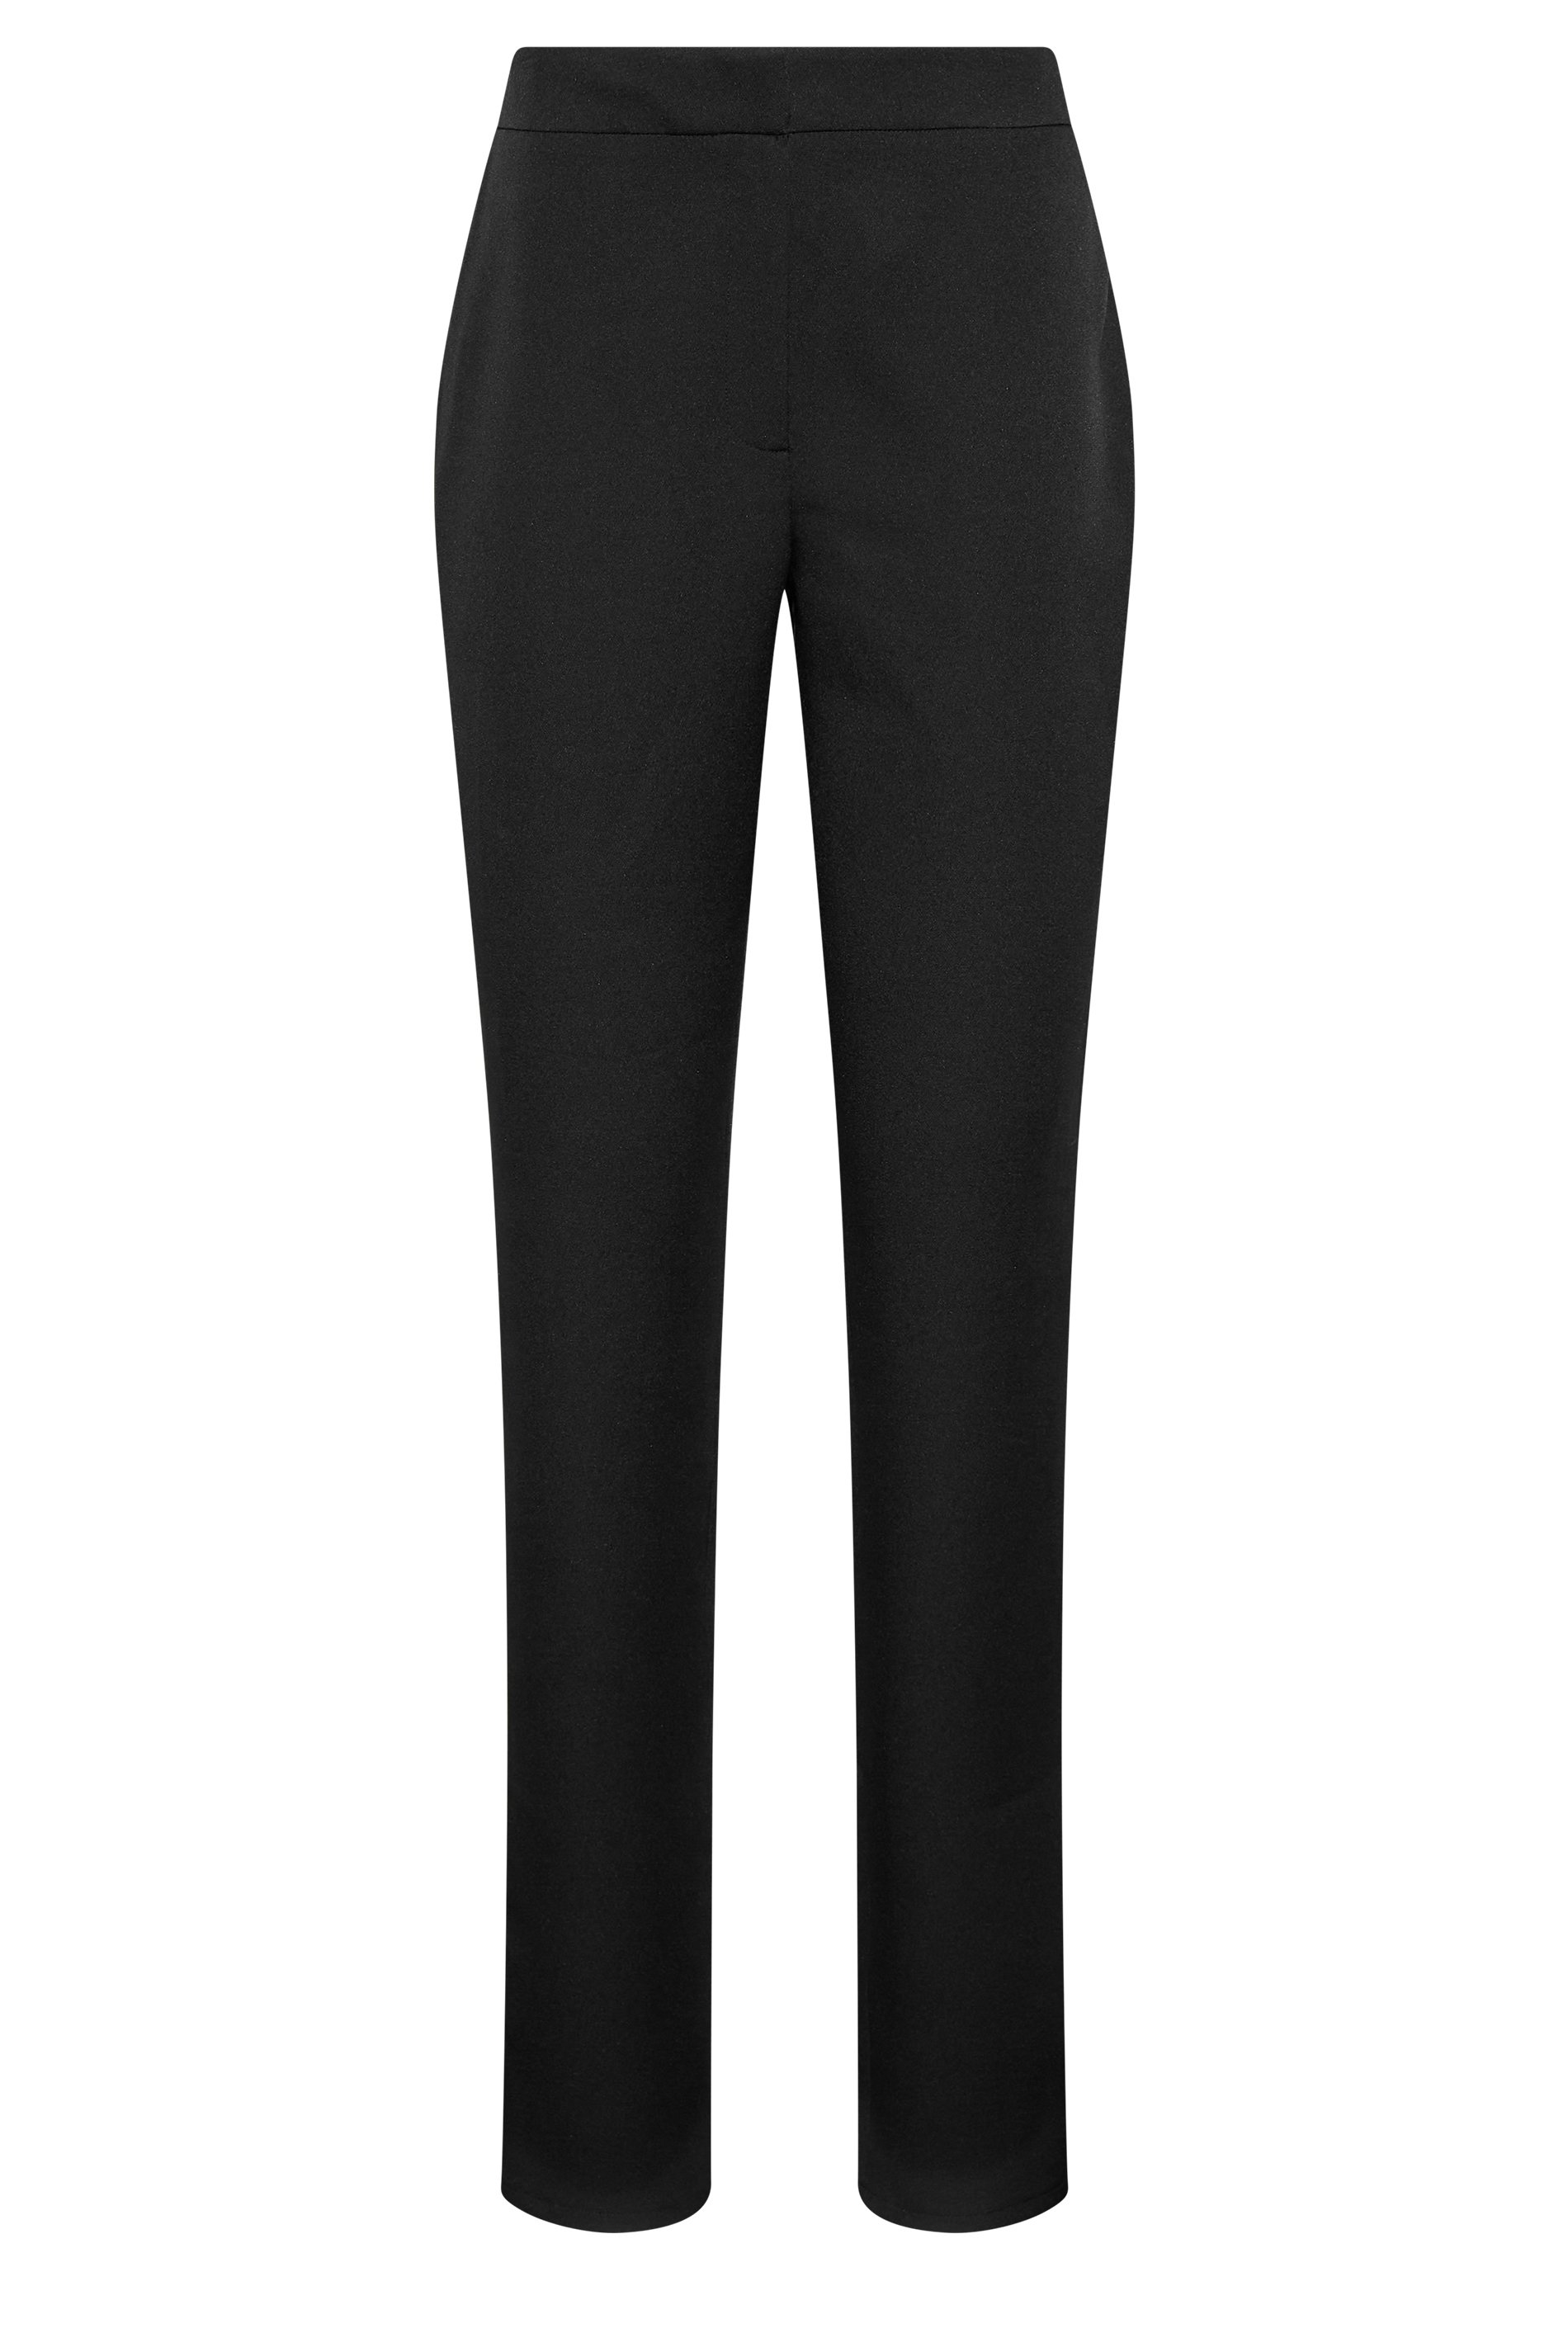 LTS Tall Black Button Detail Wide Leg Trousers | Long Tall Sally